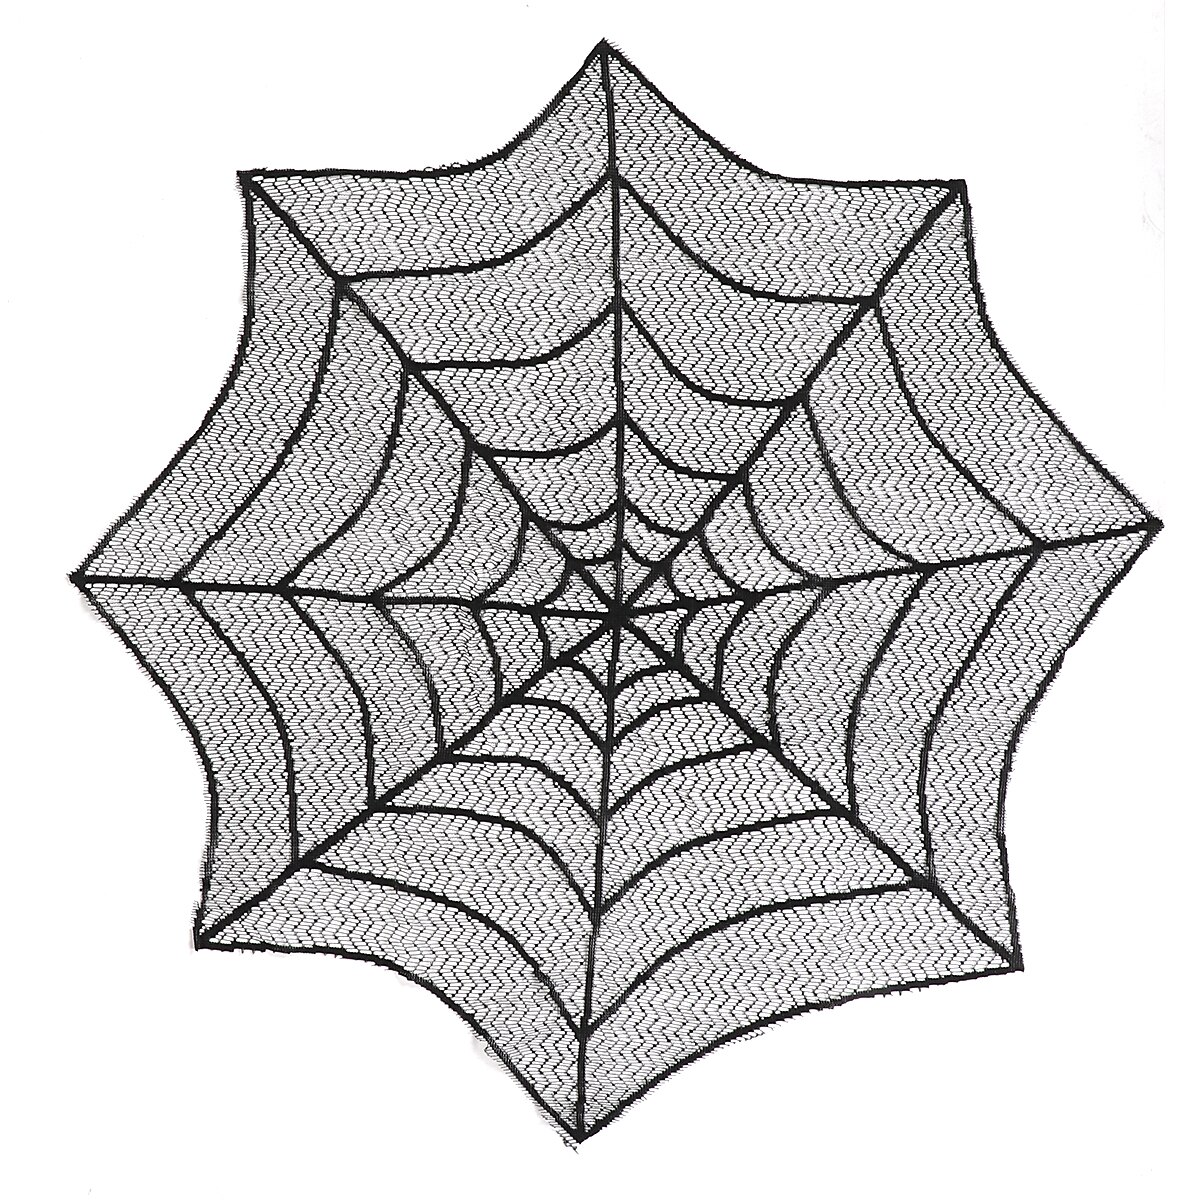 Halloween blonder edderkop web duge rundt bord topper dækker halloween bord dekoration pejs tørklæde dwh 5